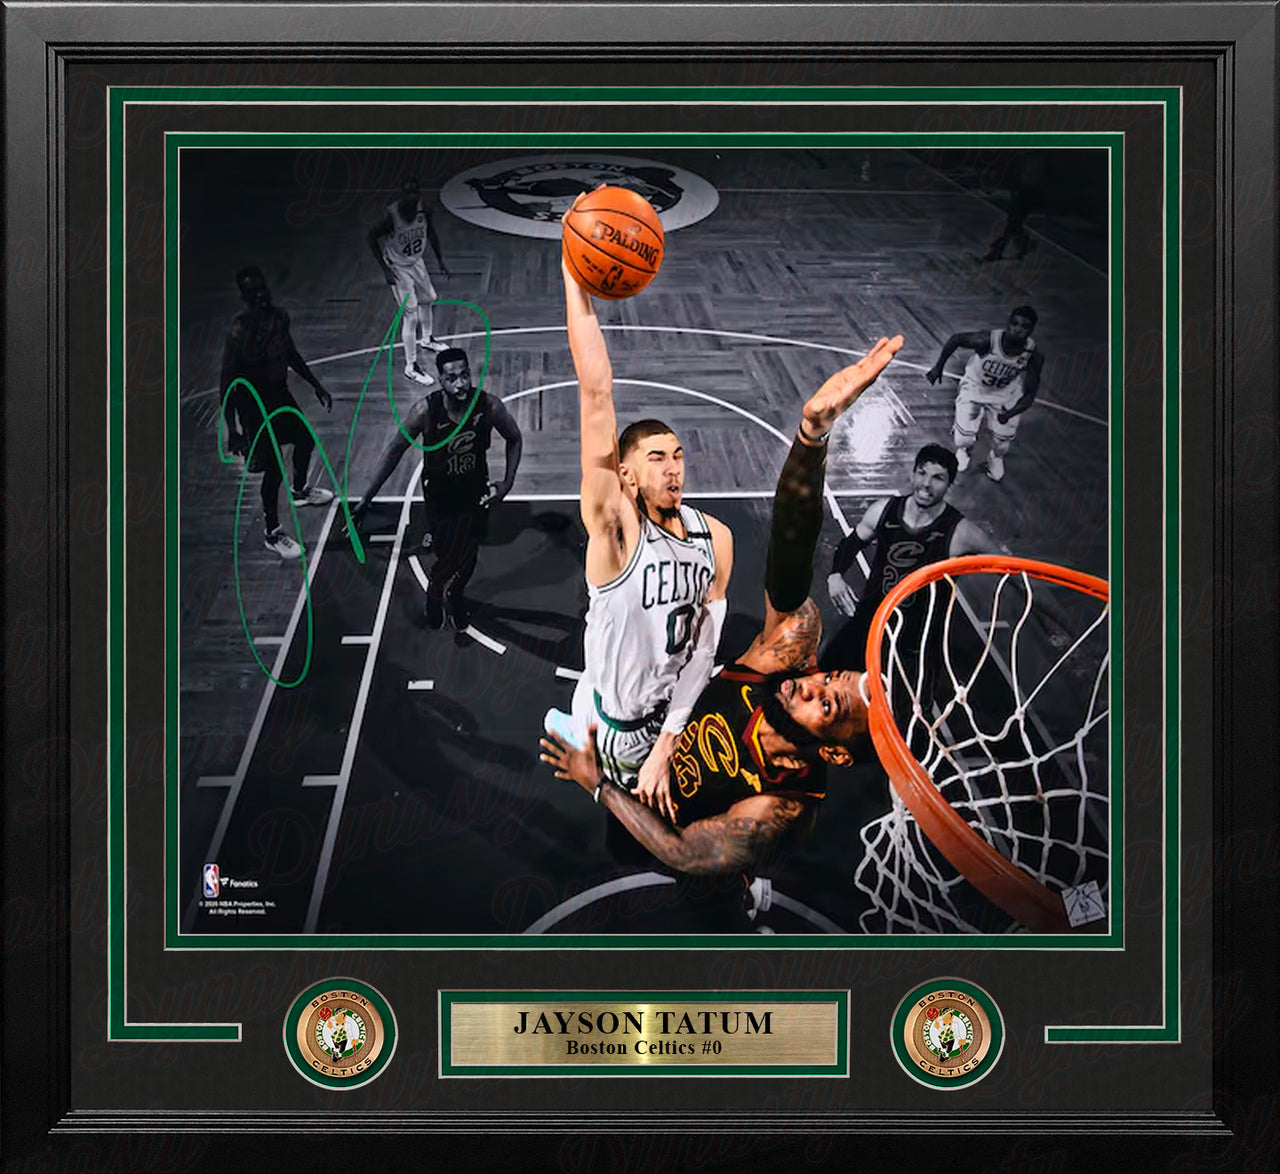 Jayson Tatum Slam Dunk v. LeBron Boston Celtics Autographed 16x20 Framed Spotlight Basketball Photo